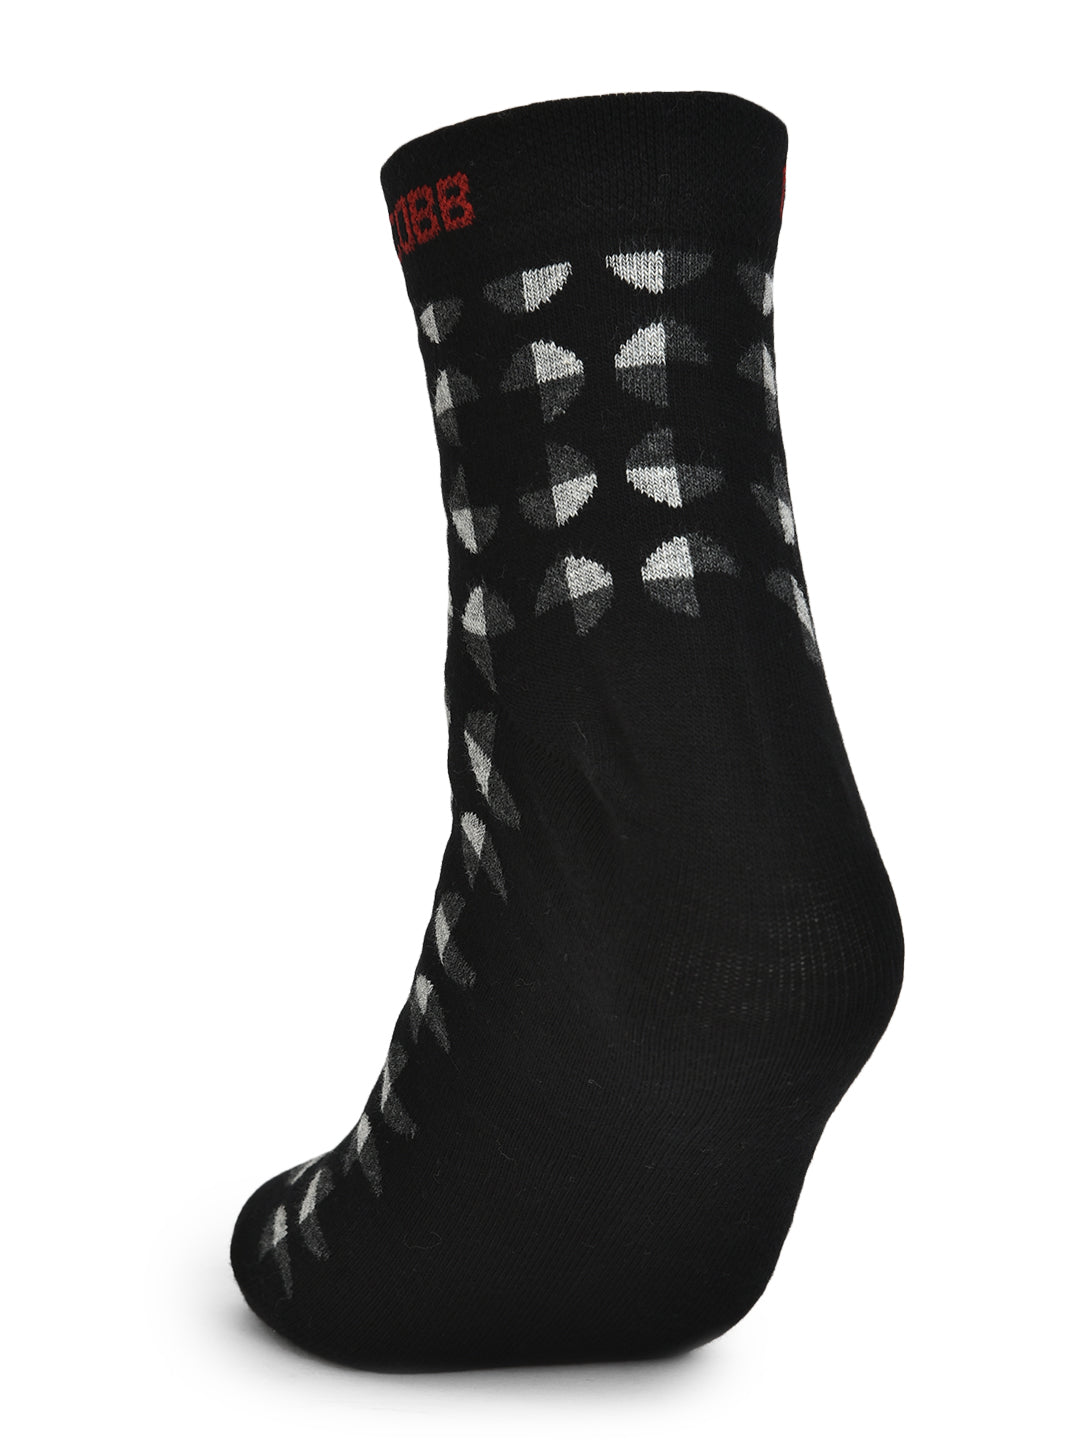 Cobb Black Half Ankle Socks